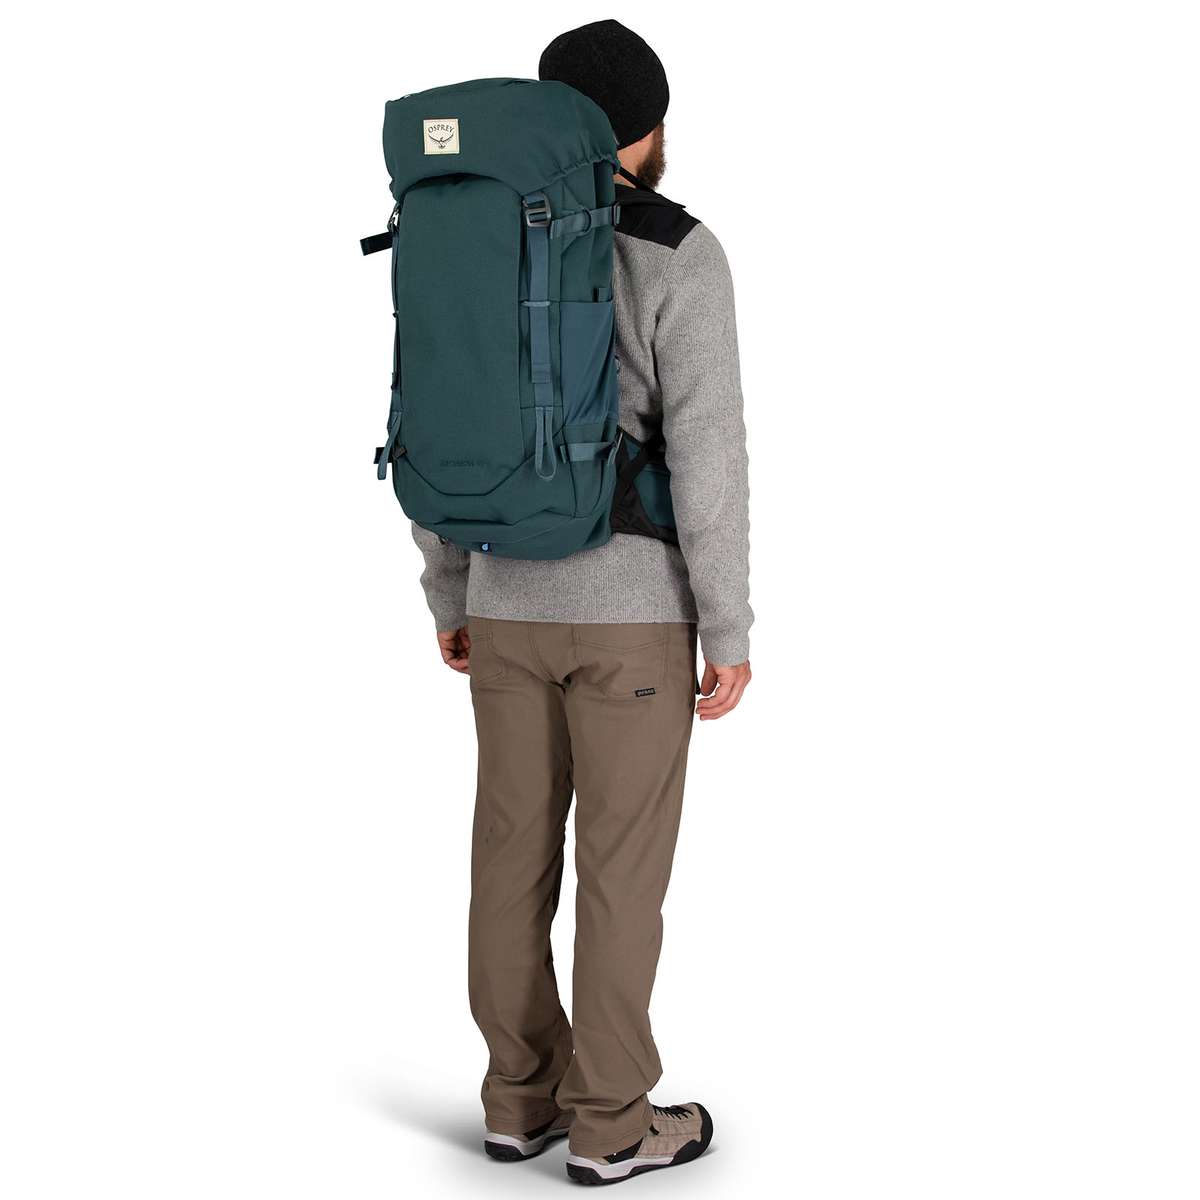 Osprey Archeon 45 - Men's | Backpacking Packs | BackcountryGear.com